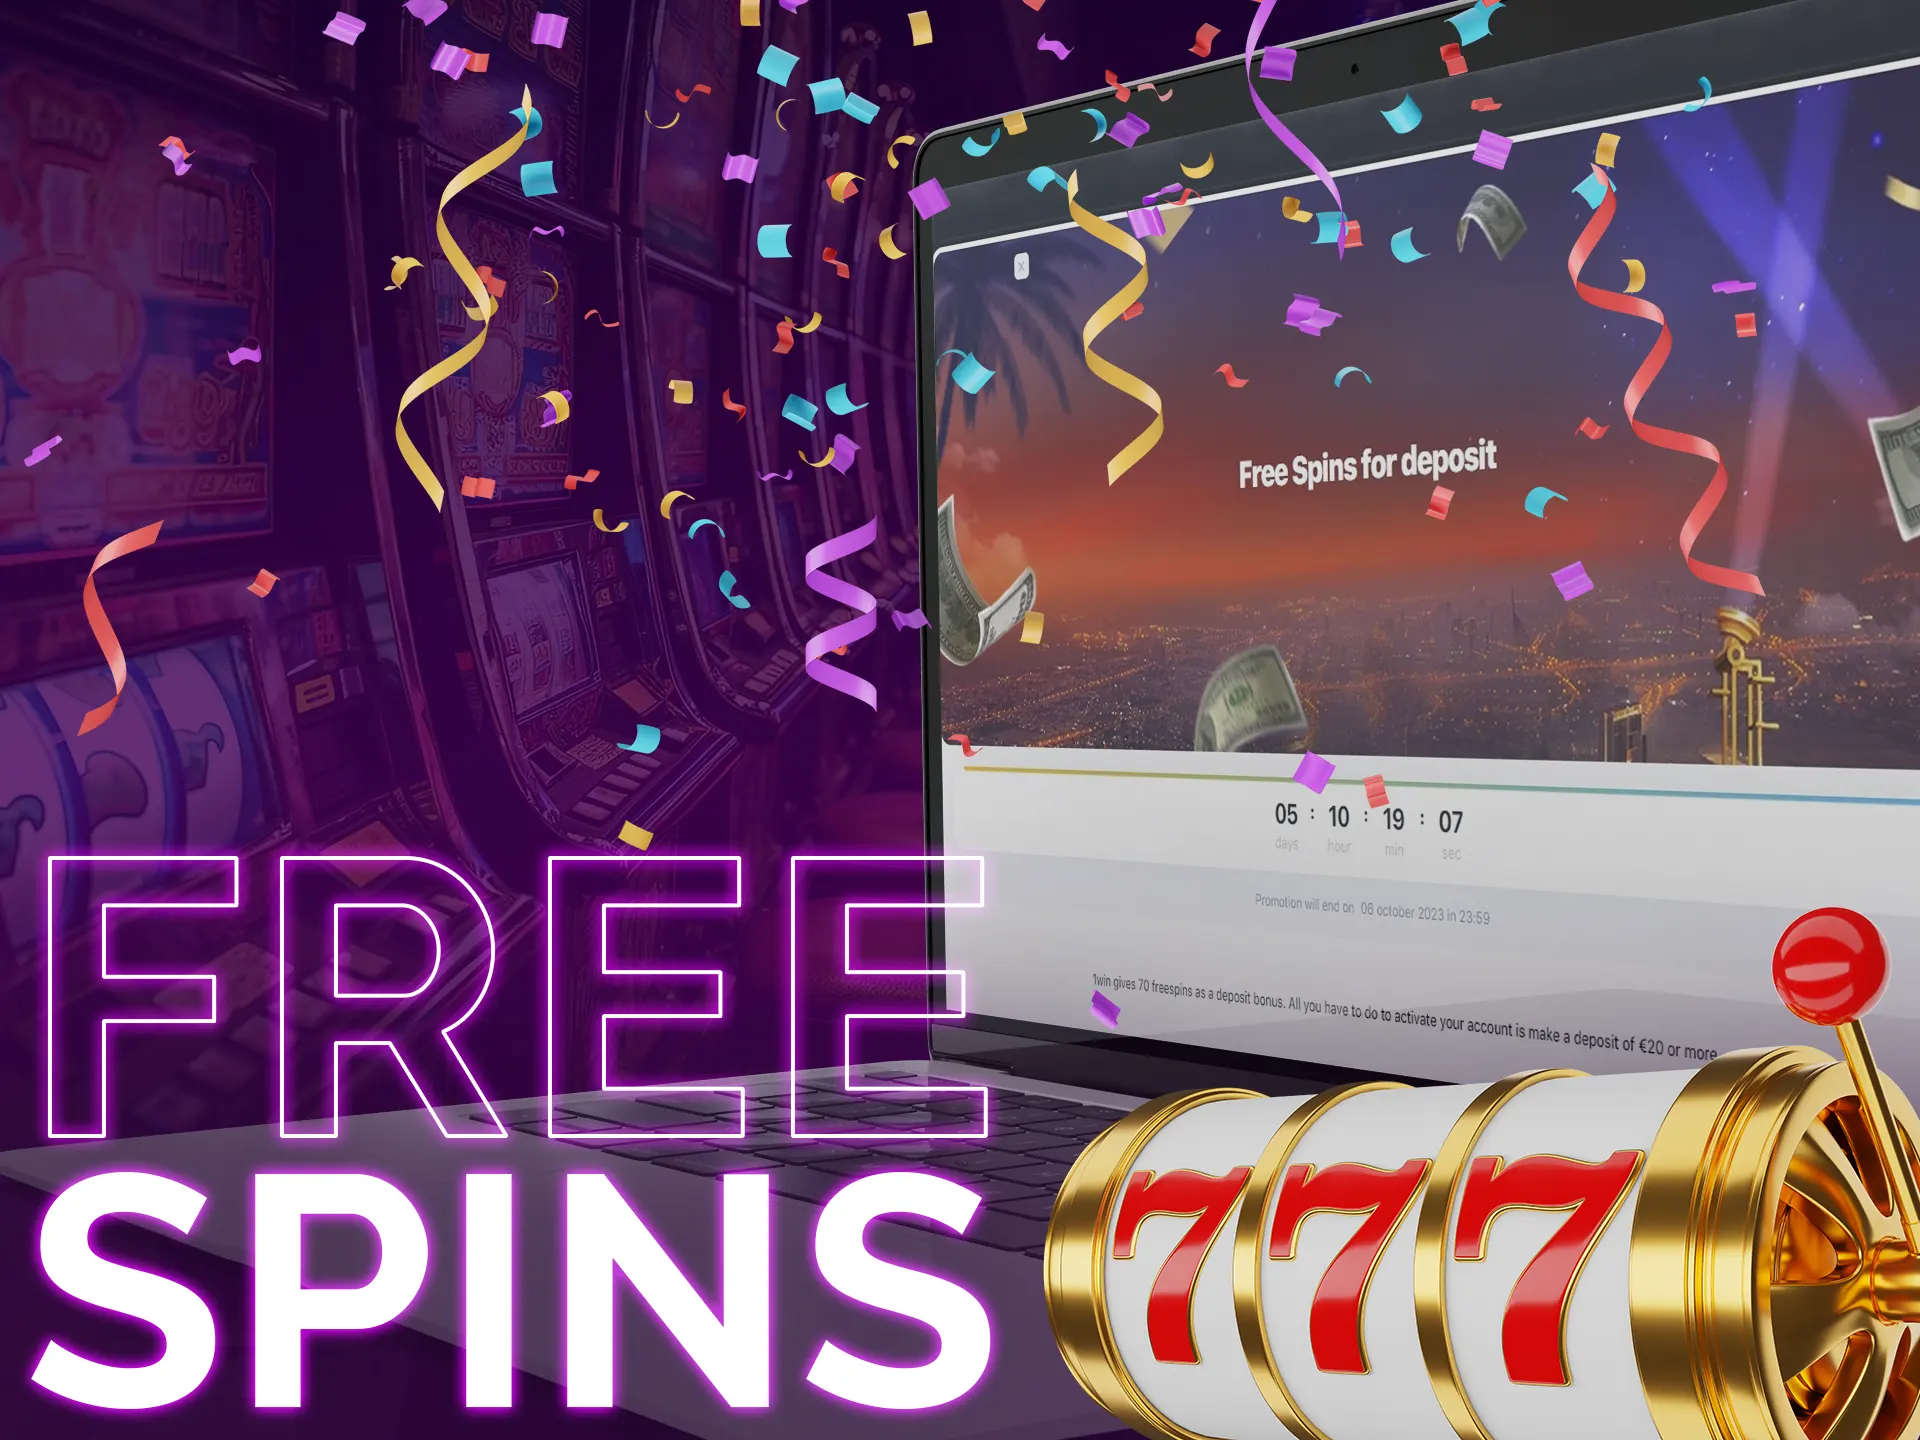 Get free spins as a part of live casino bonus.